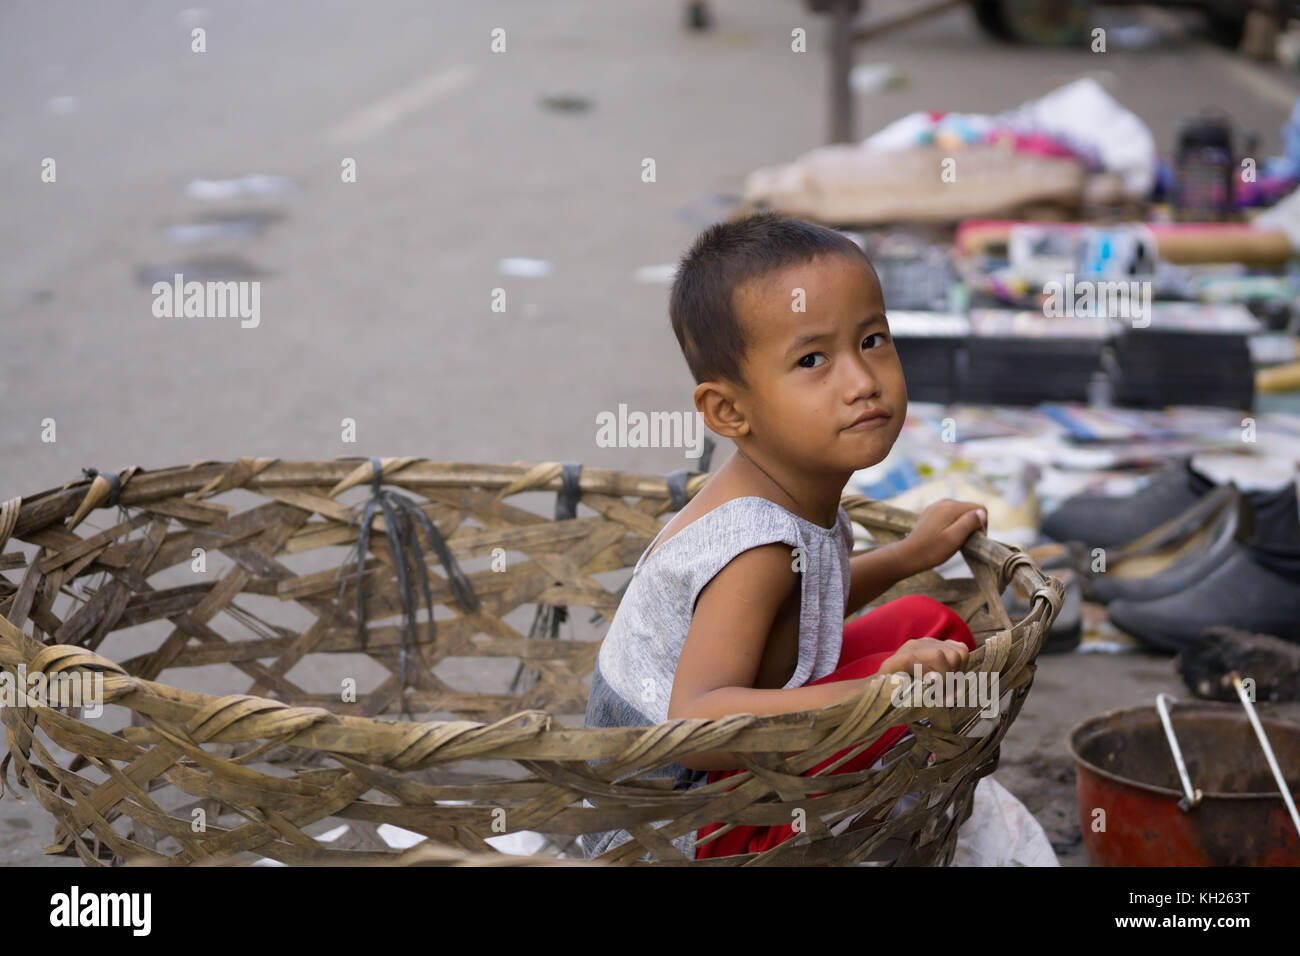 A Filipino boy sitting in a basket,downtown Cebu City,Philippines Stock Photo